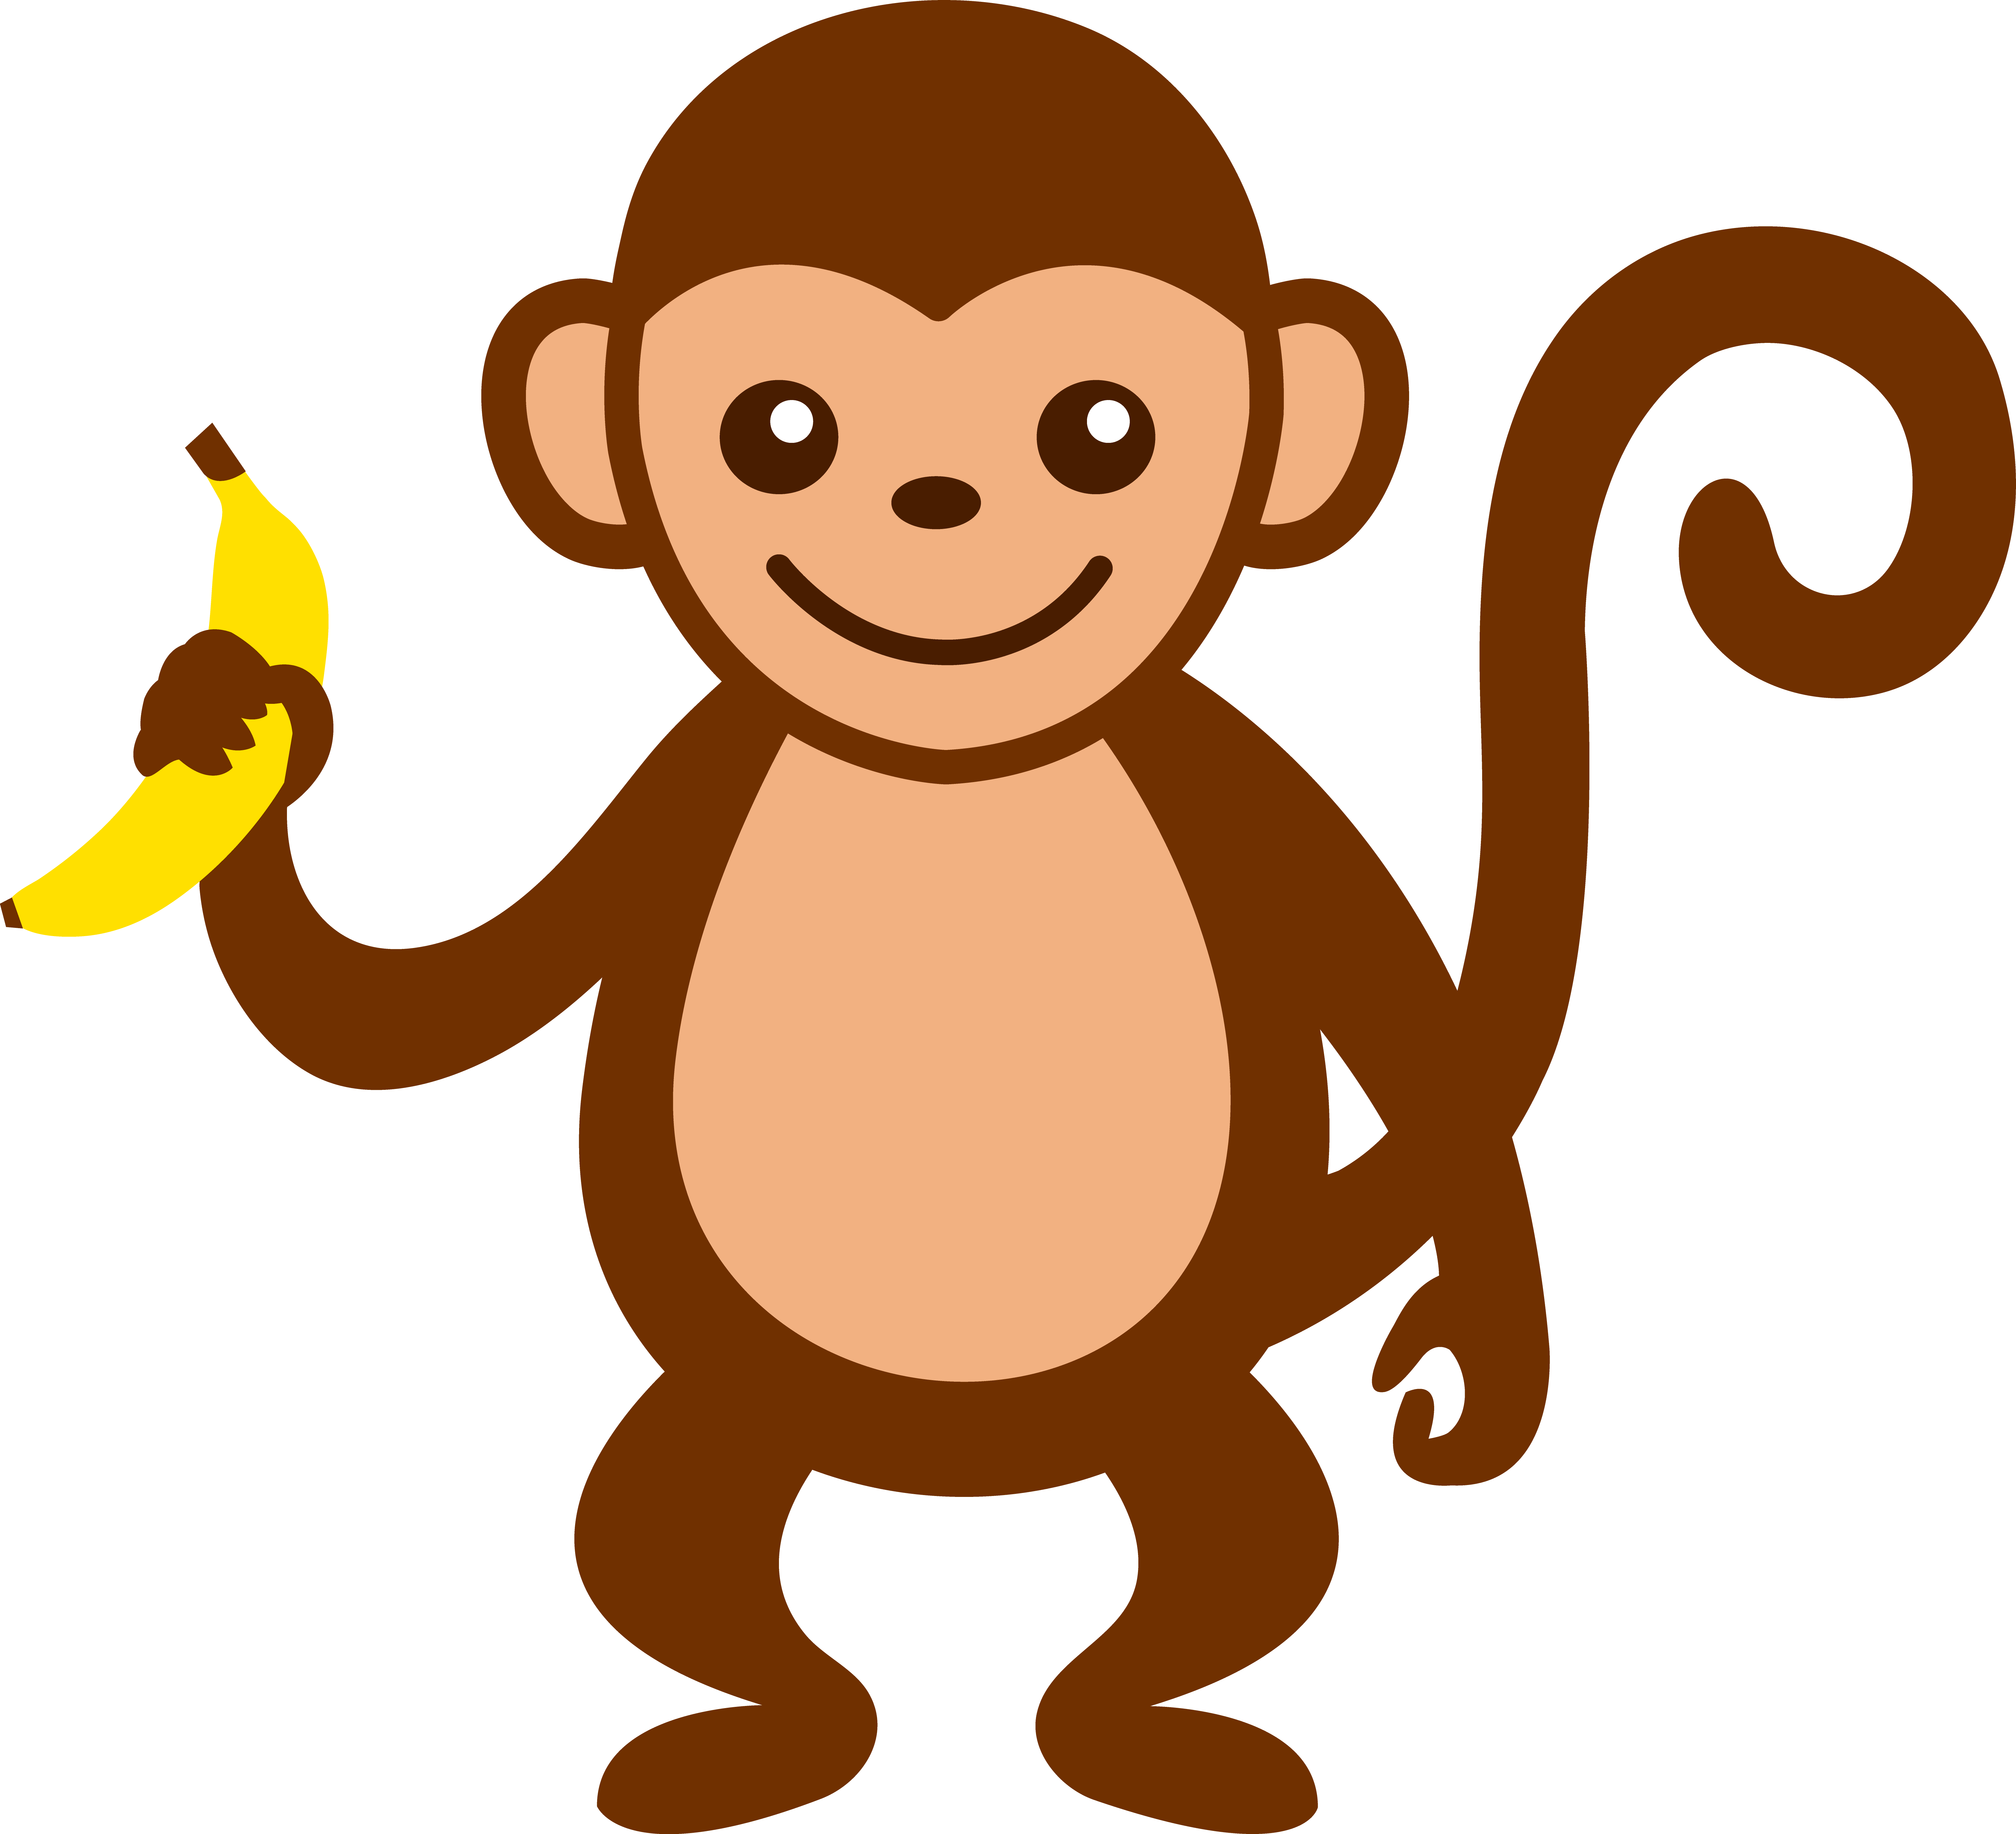 Cute Monkey With Banana - Free Clip Art